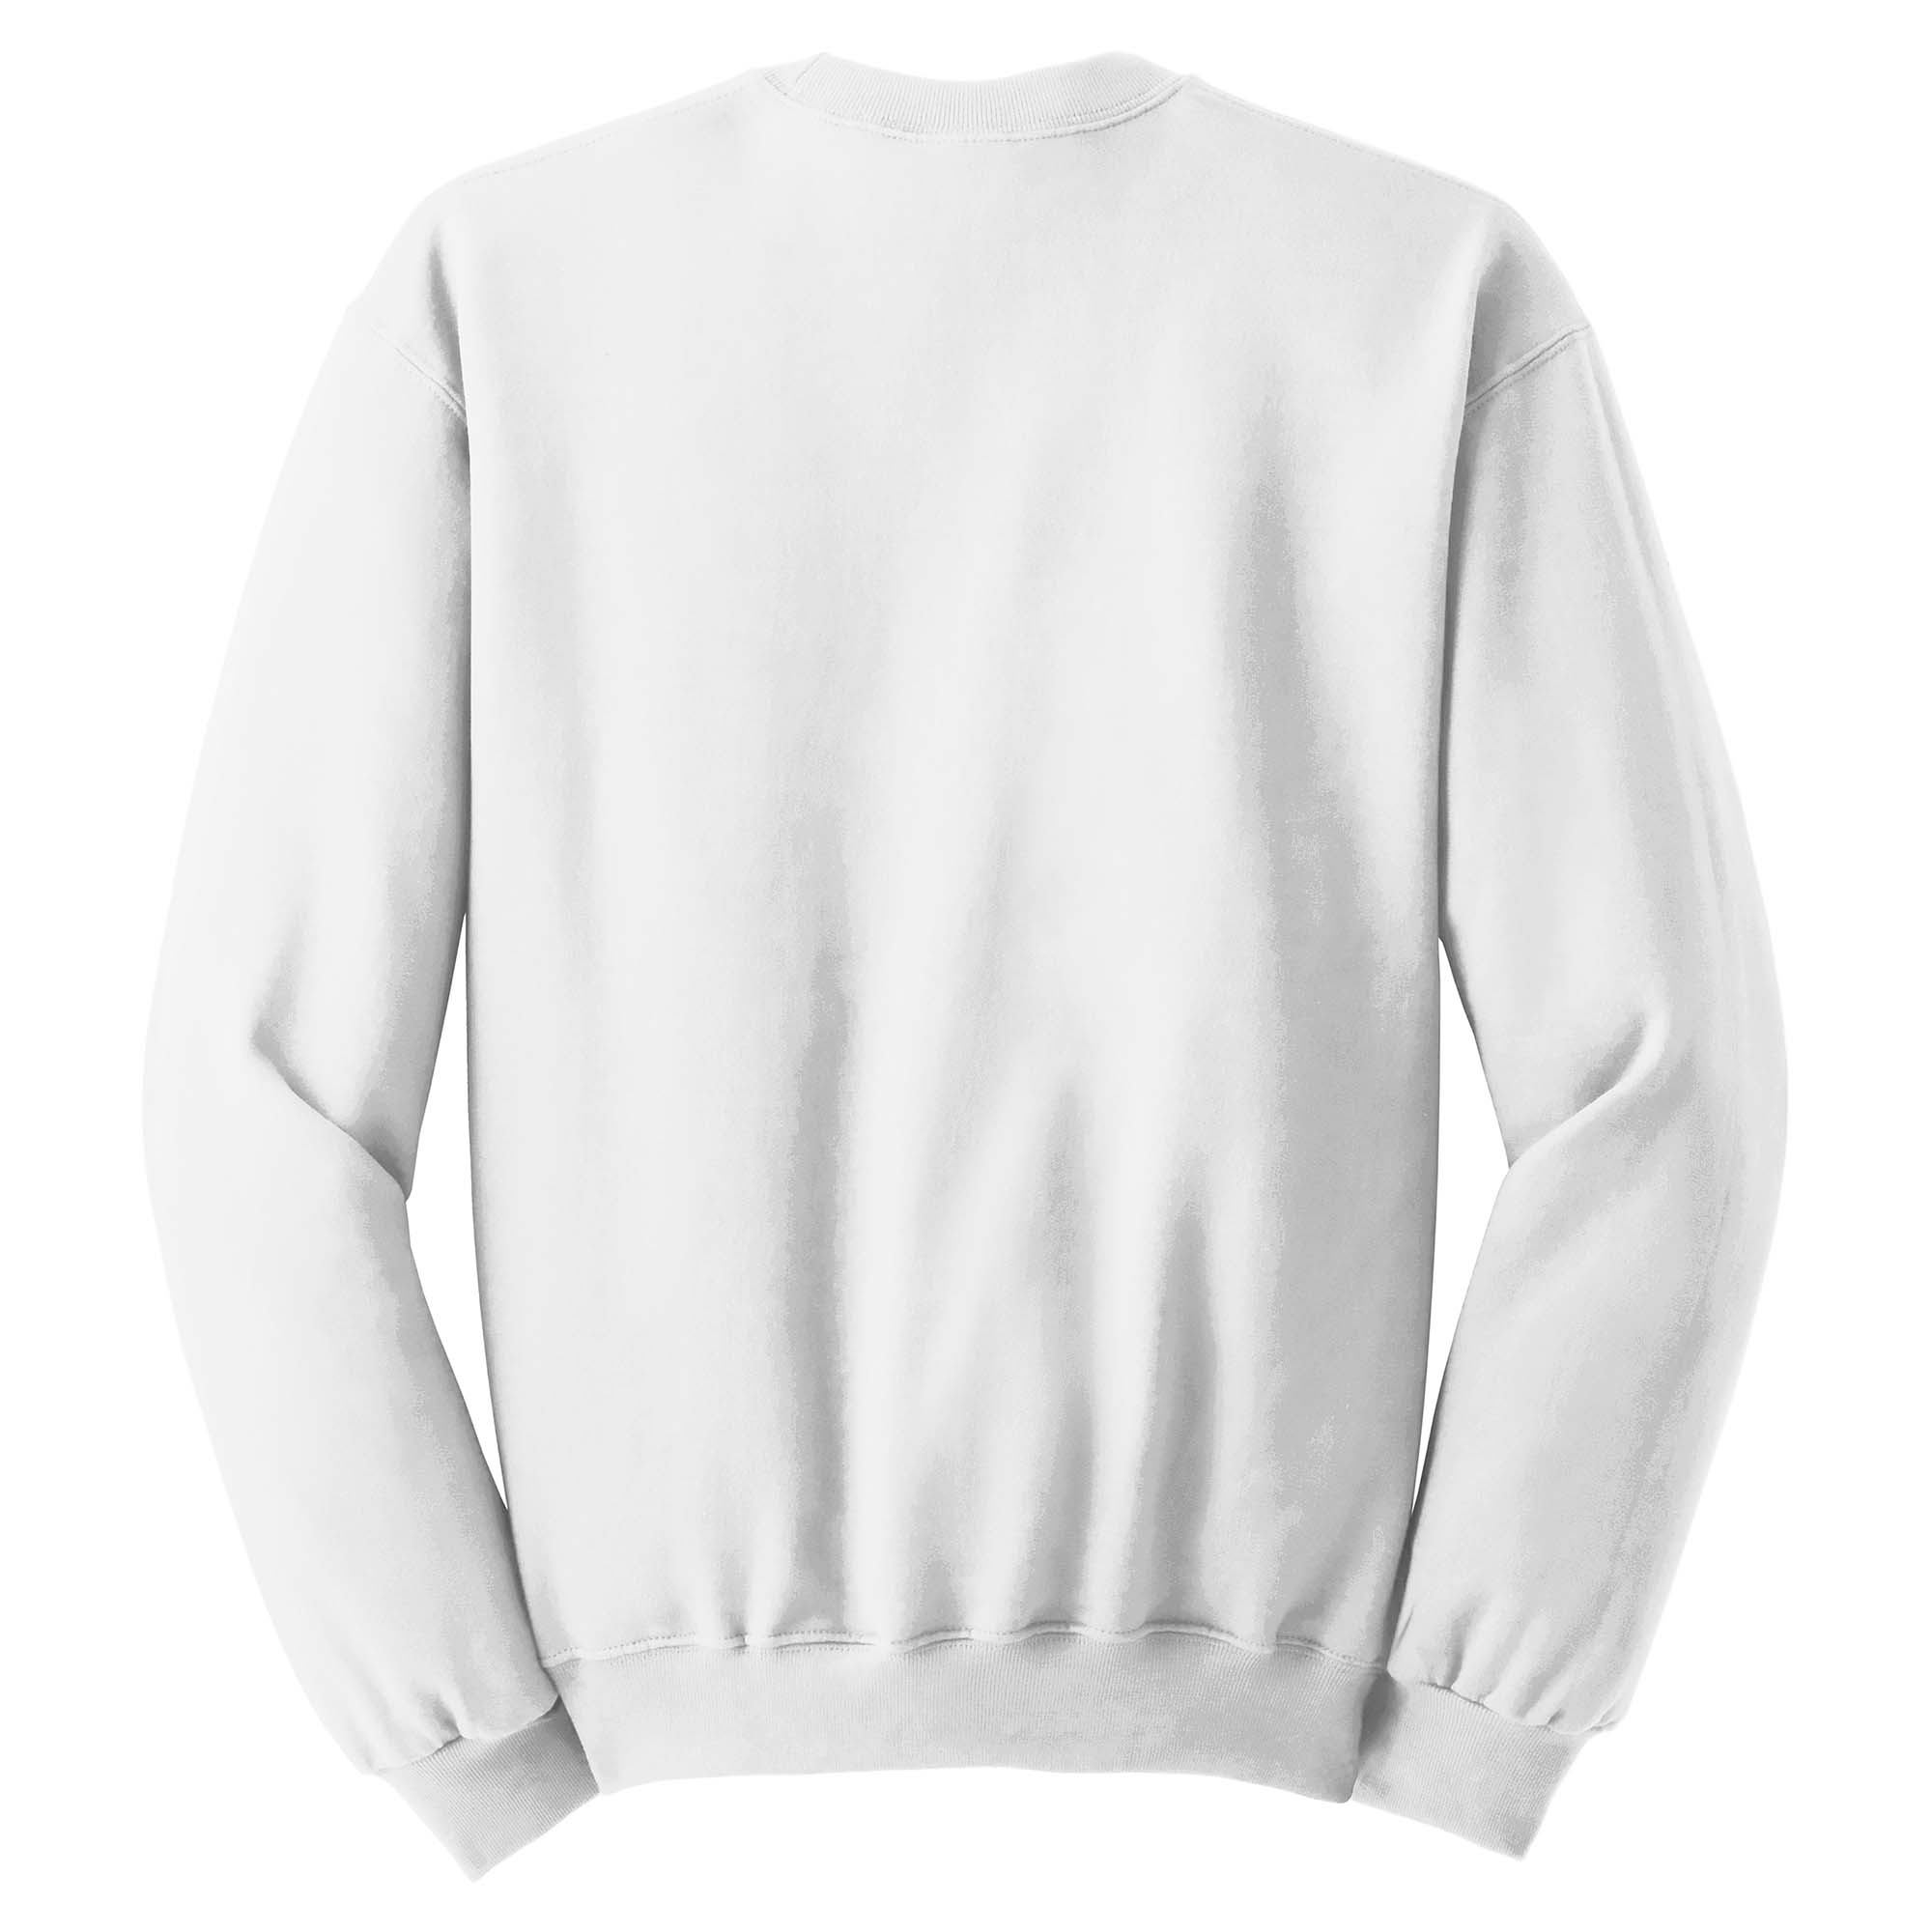 Jerzees 562M NuBlend Crewneck Sweatshirt - White | Full Source